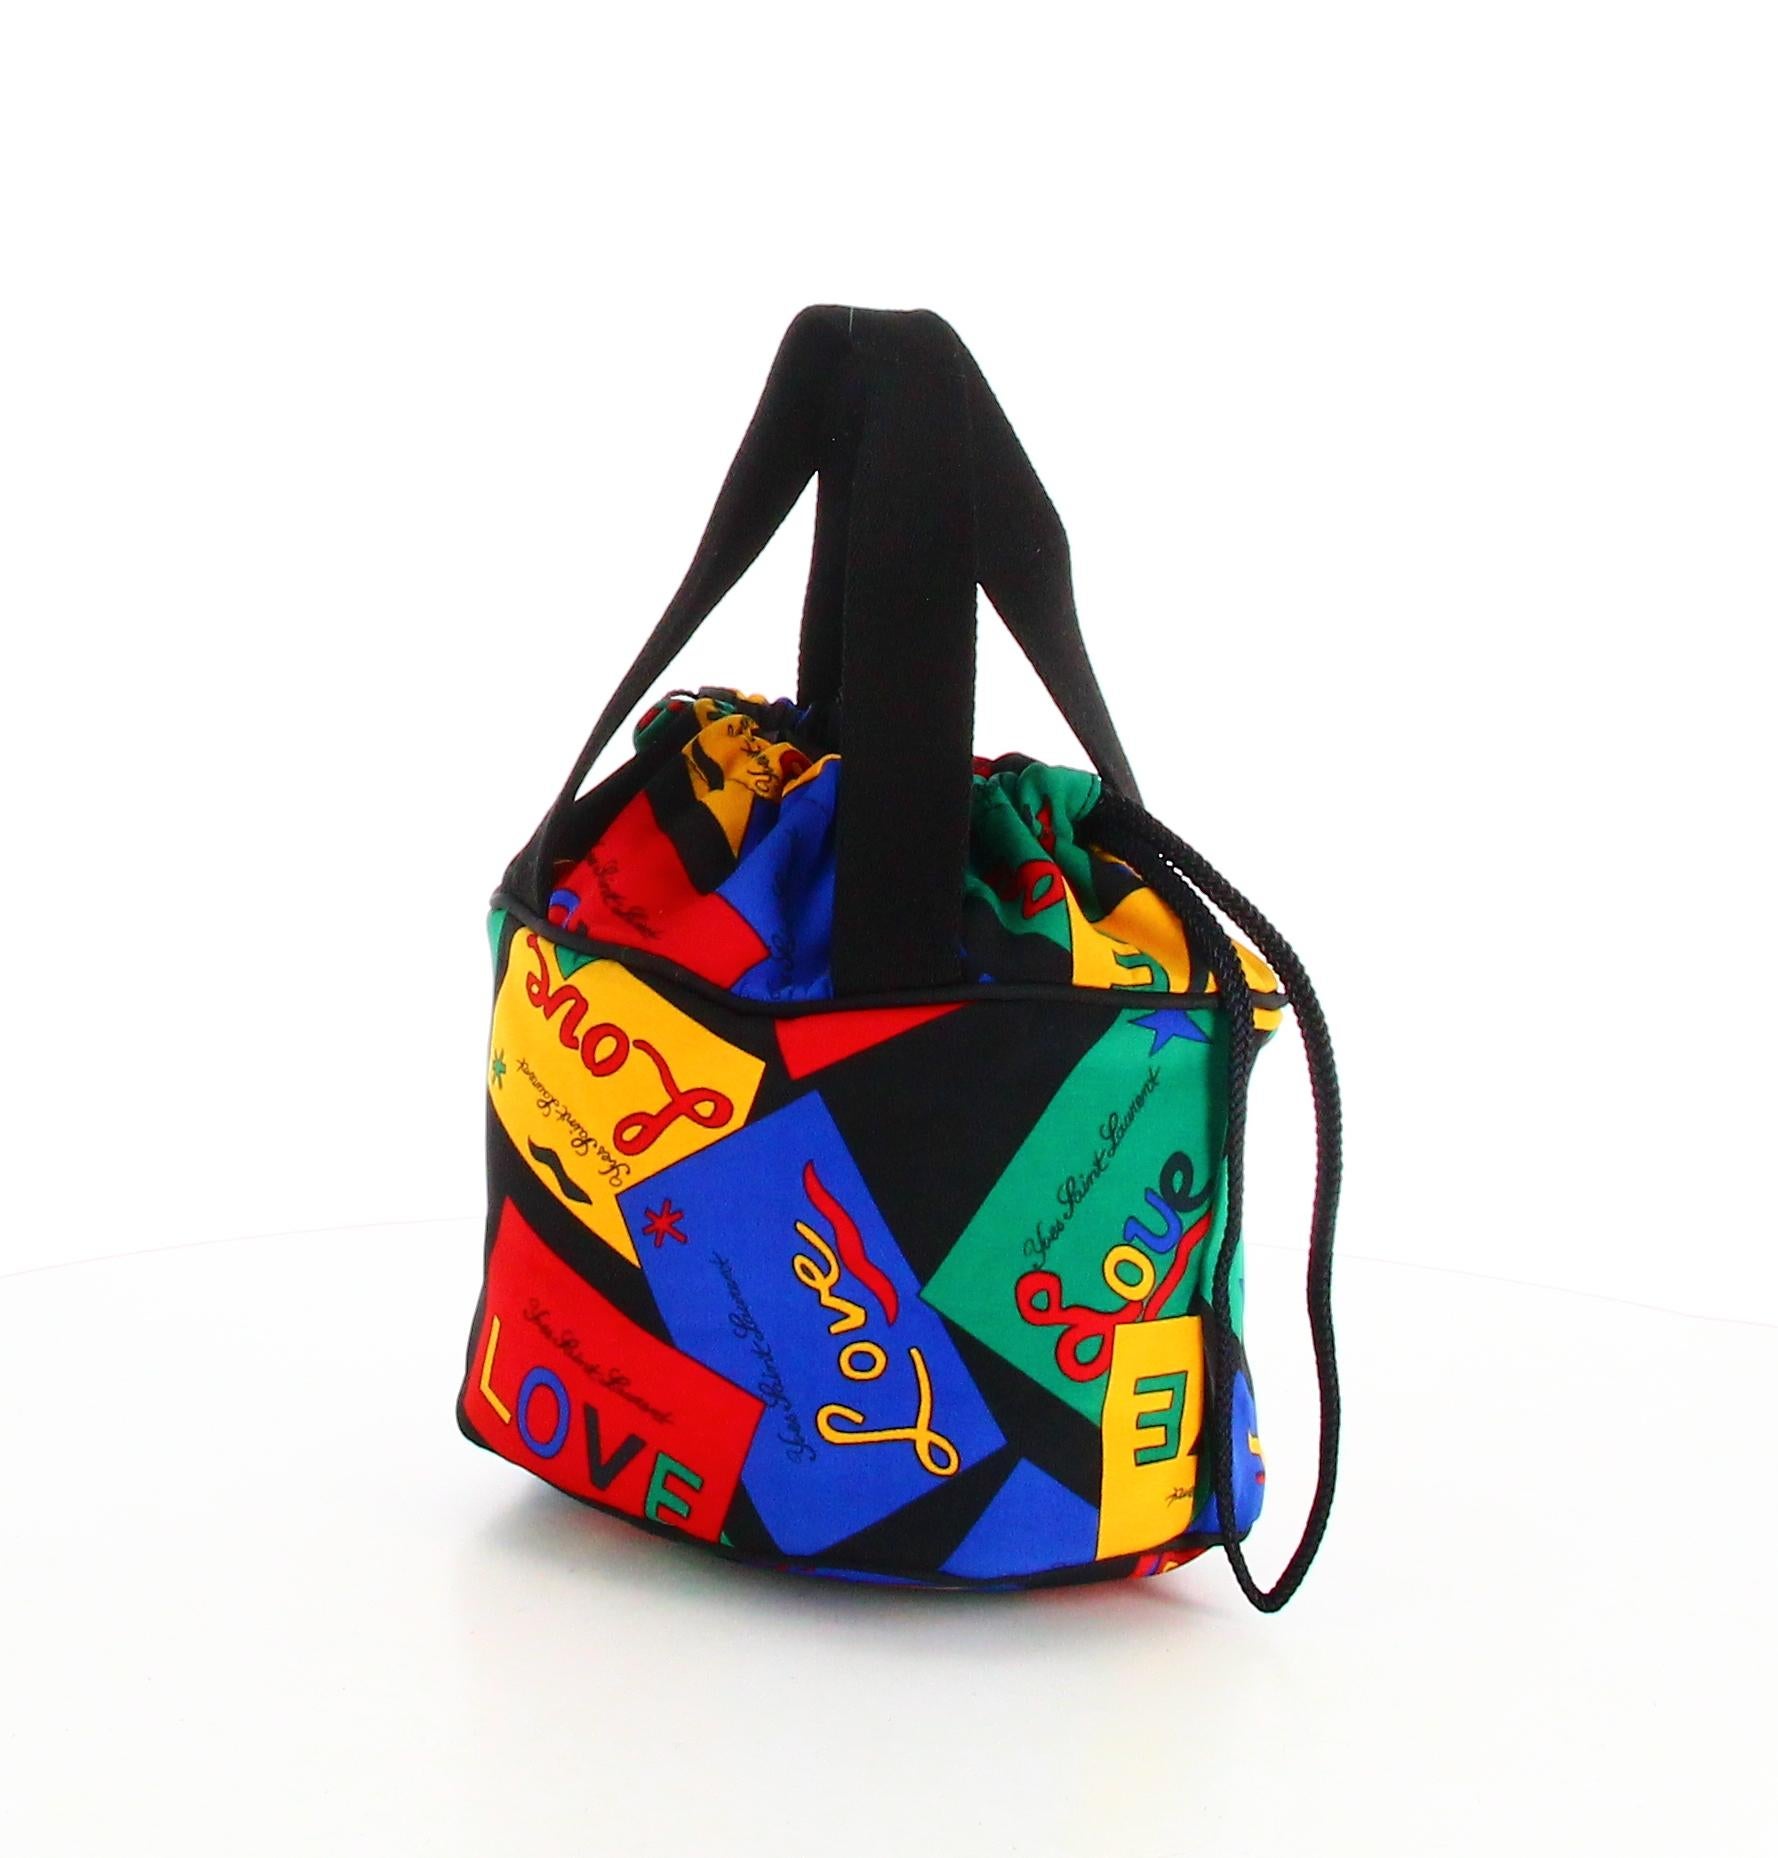 Yves Saint Laurent Tricolor Monogram Mini Handbag In Good Condition For Sale In PARIS, FR